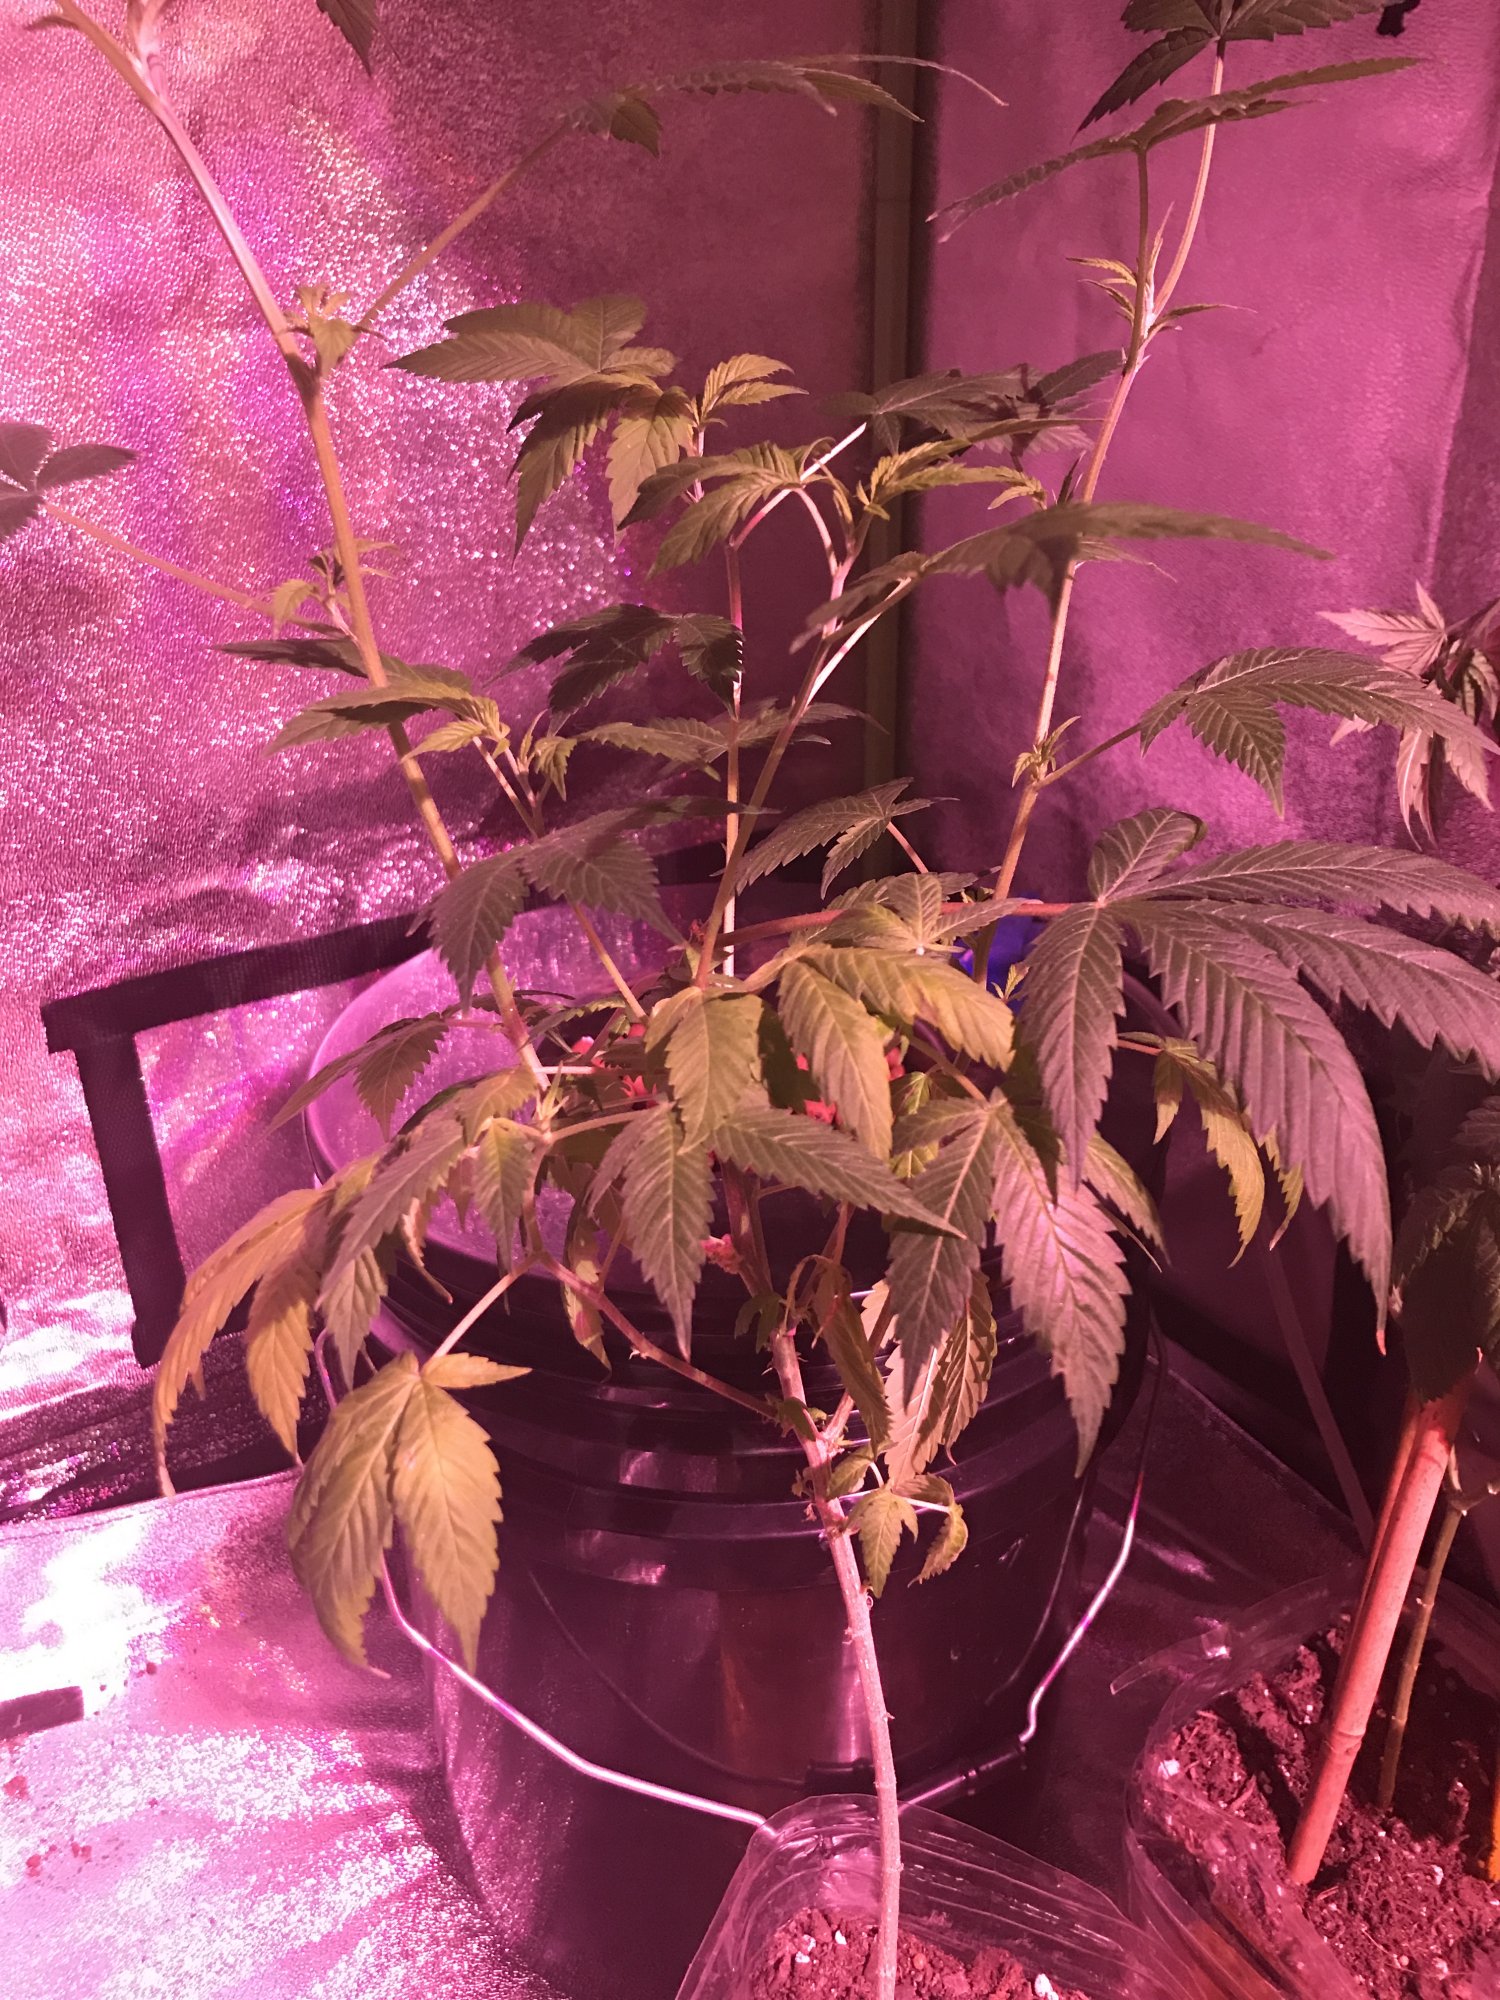 Droopy hydroponicsoil cannabis plant need help plz 3